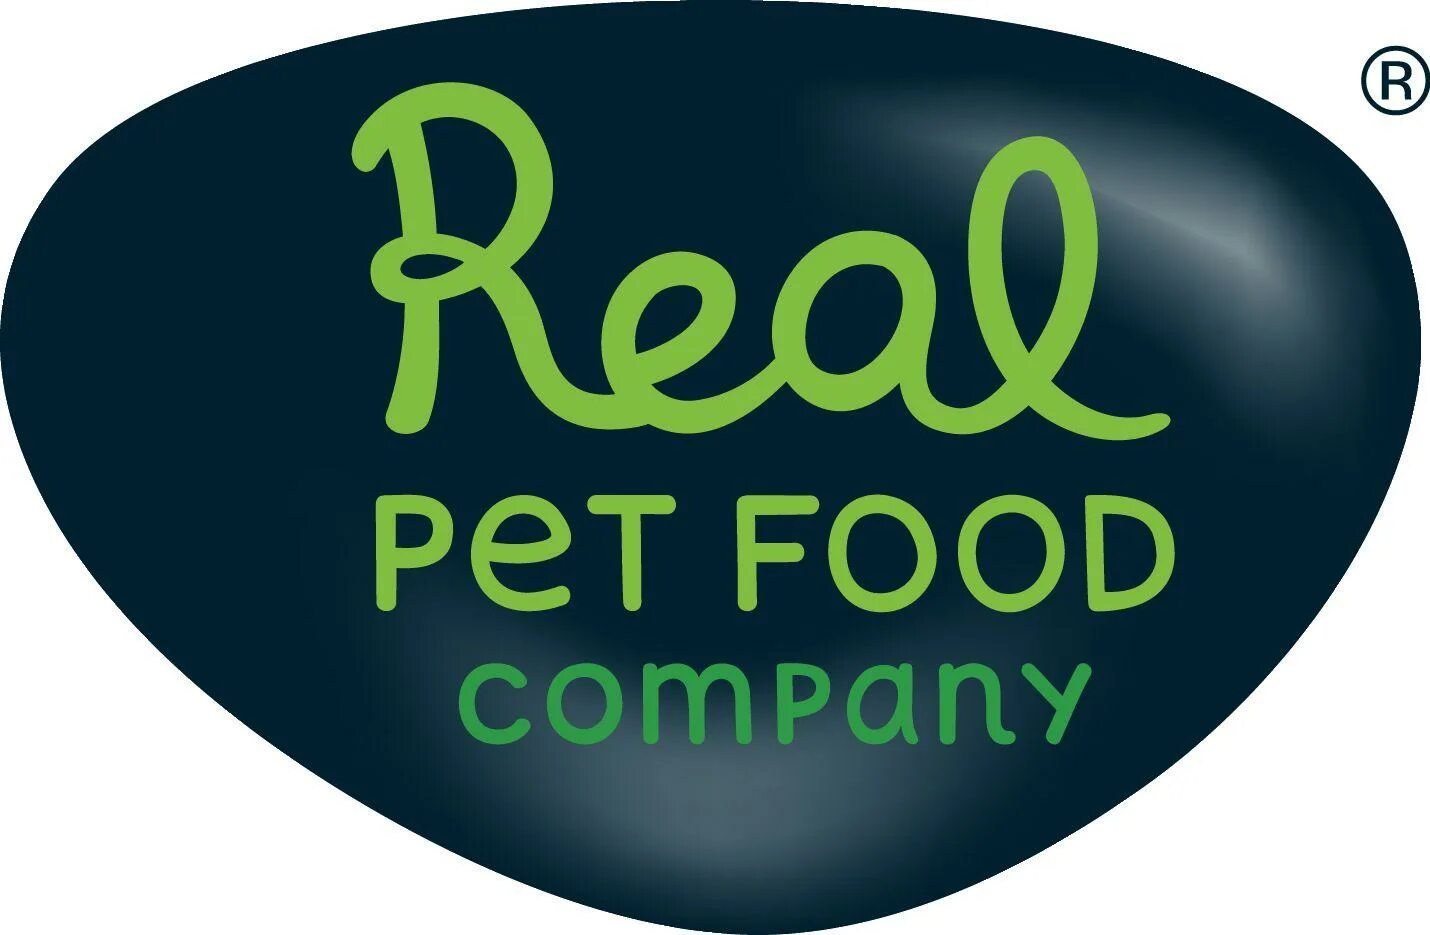 Food Company. Pets food Company. Логотип фуд Компани. Логотип еды для собак. Пет фуд